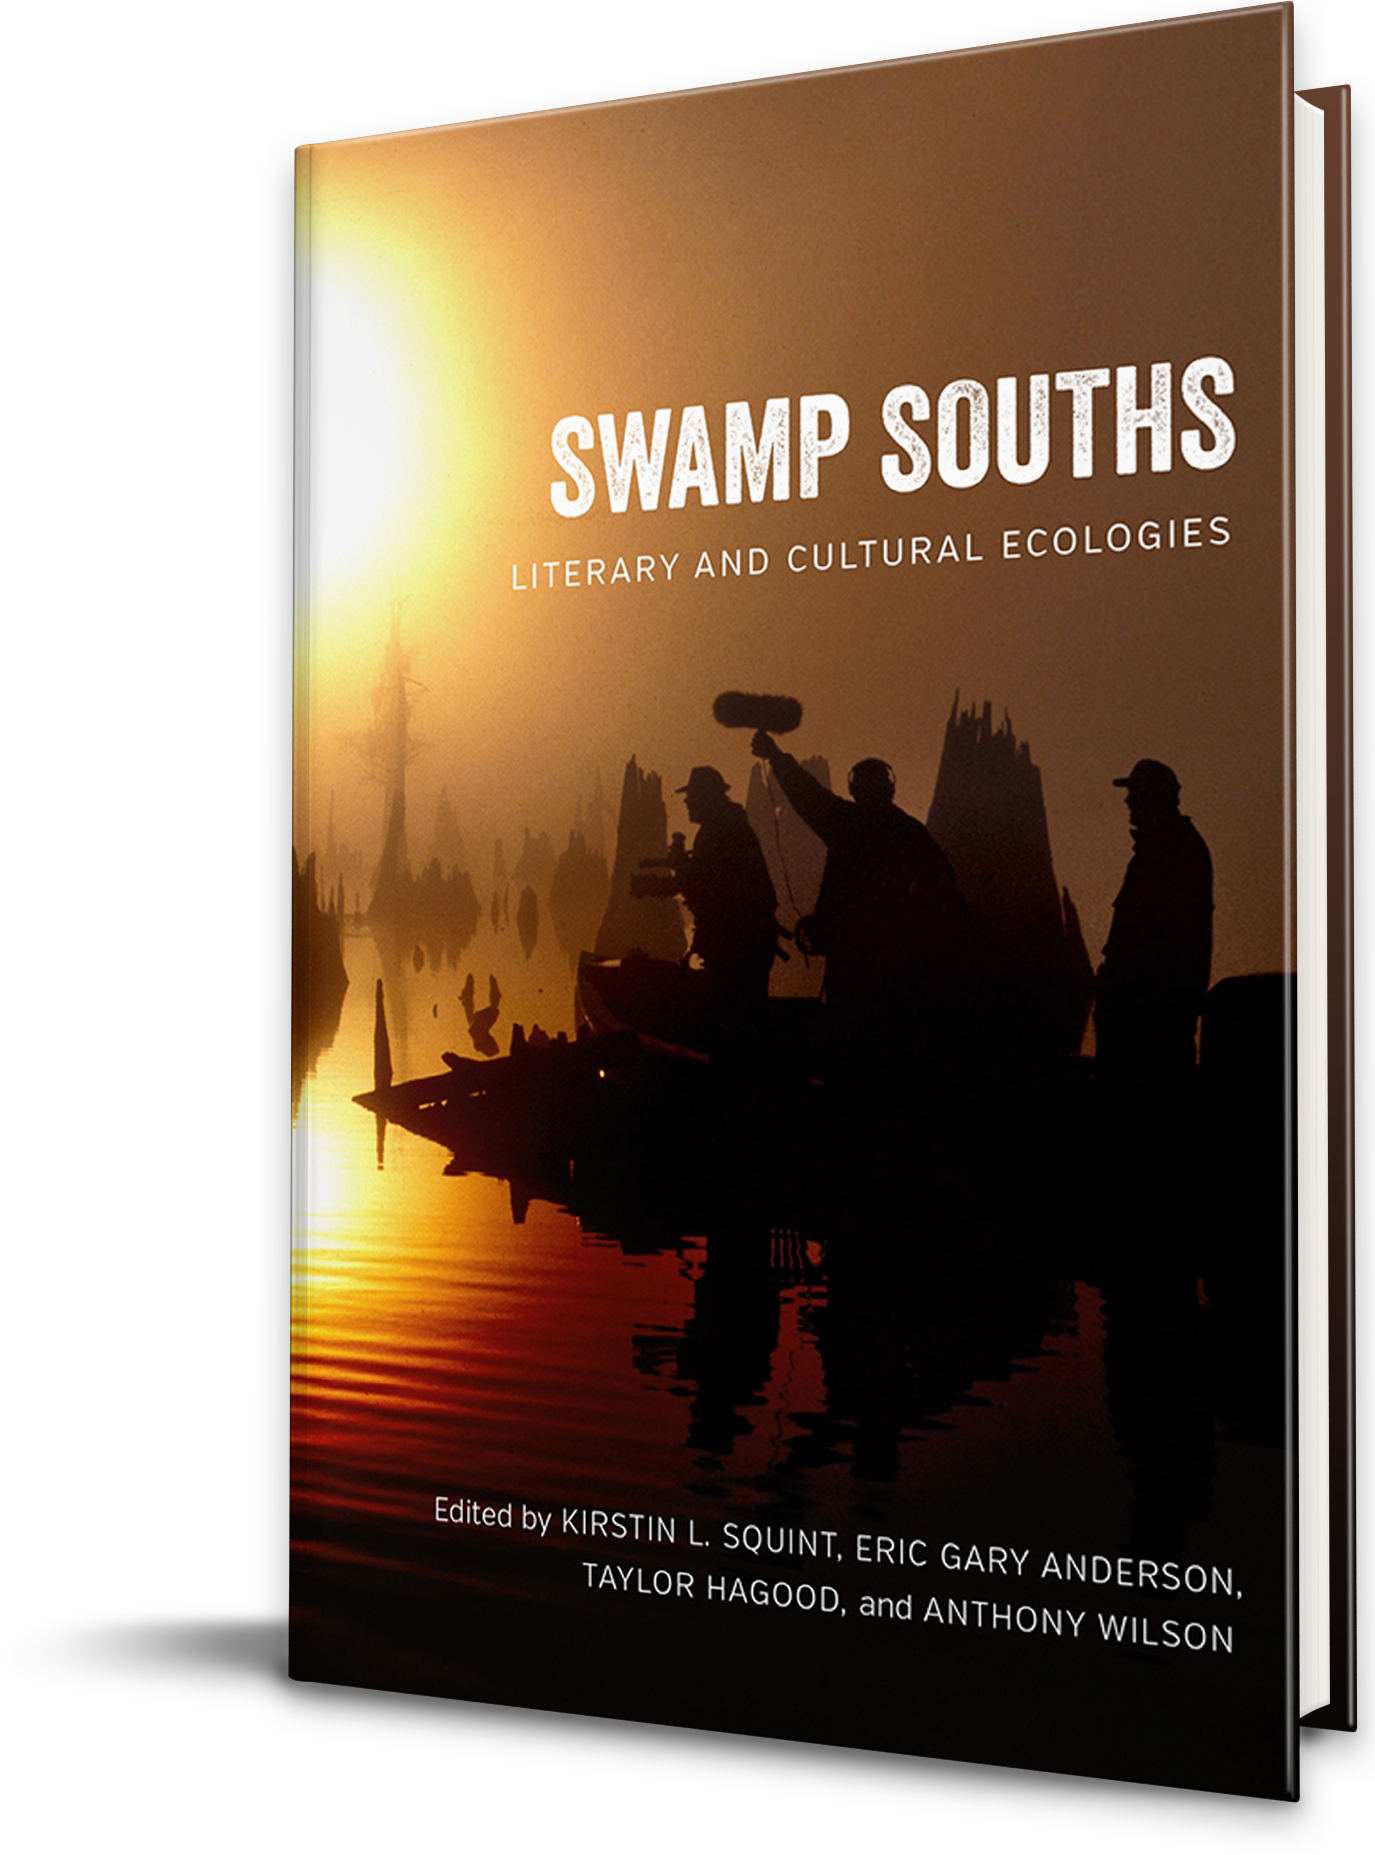 Swamp Souths